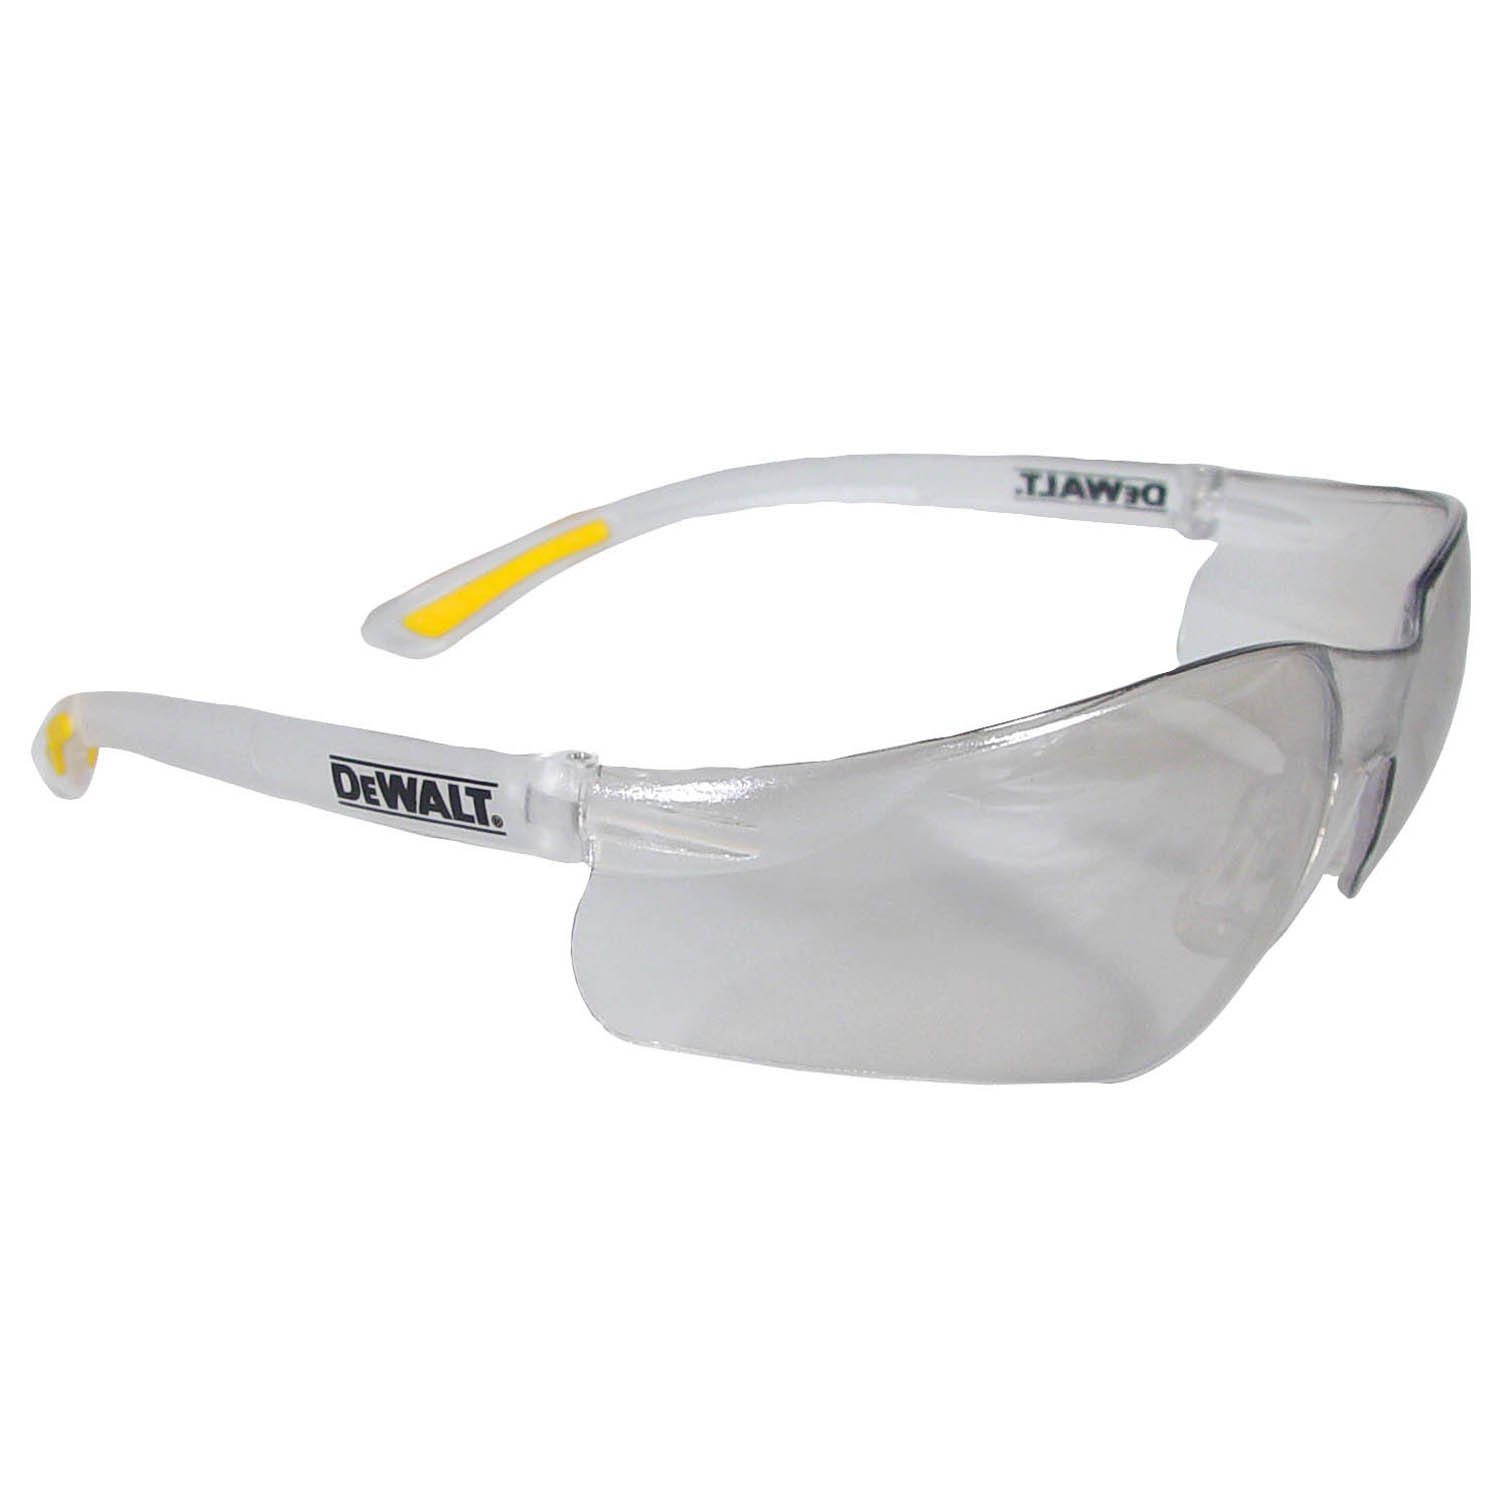 Schutzbrille DeWalt Pro™ Arbeitsschutzbrille DPG52-9DEU DIN Antibeschlagschutz EN 166 Contractor